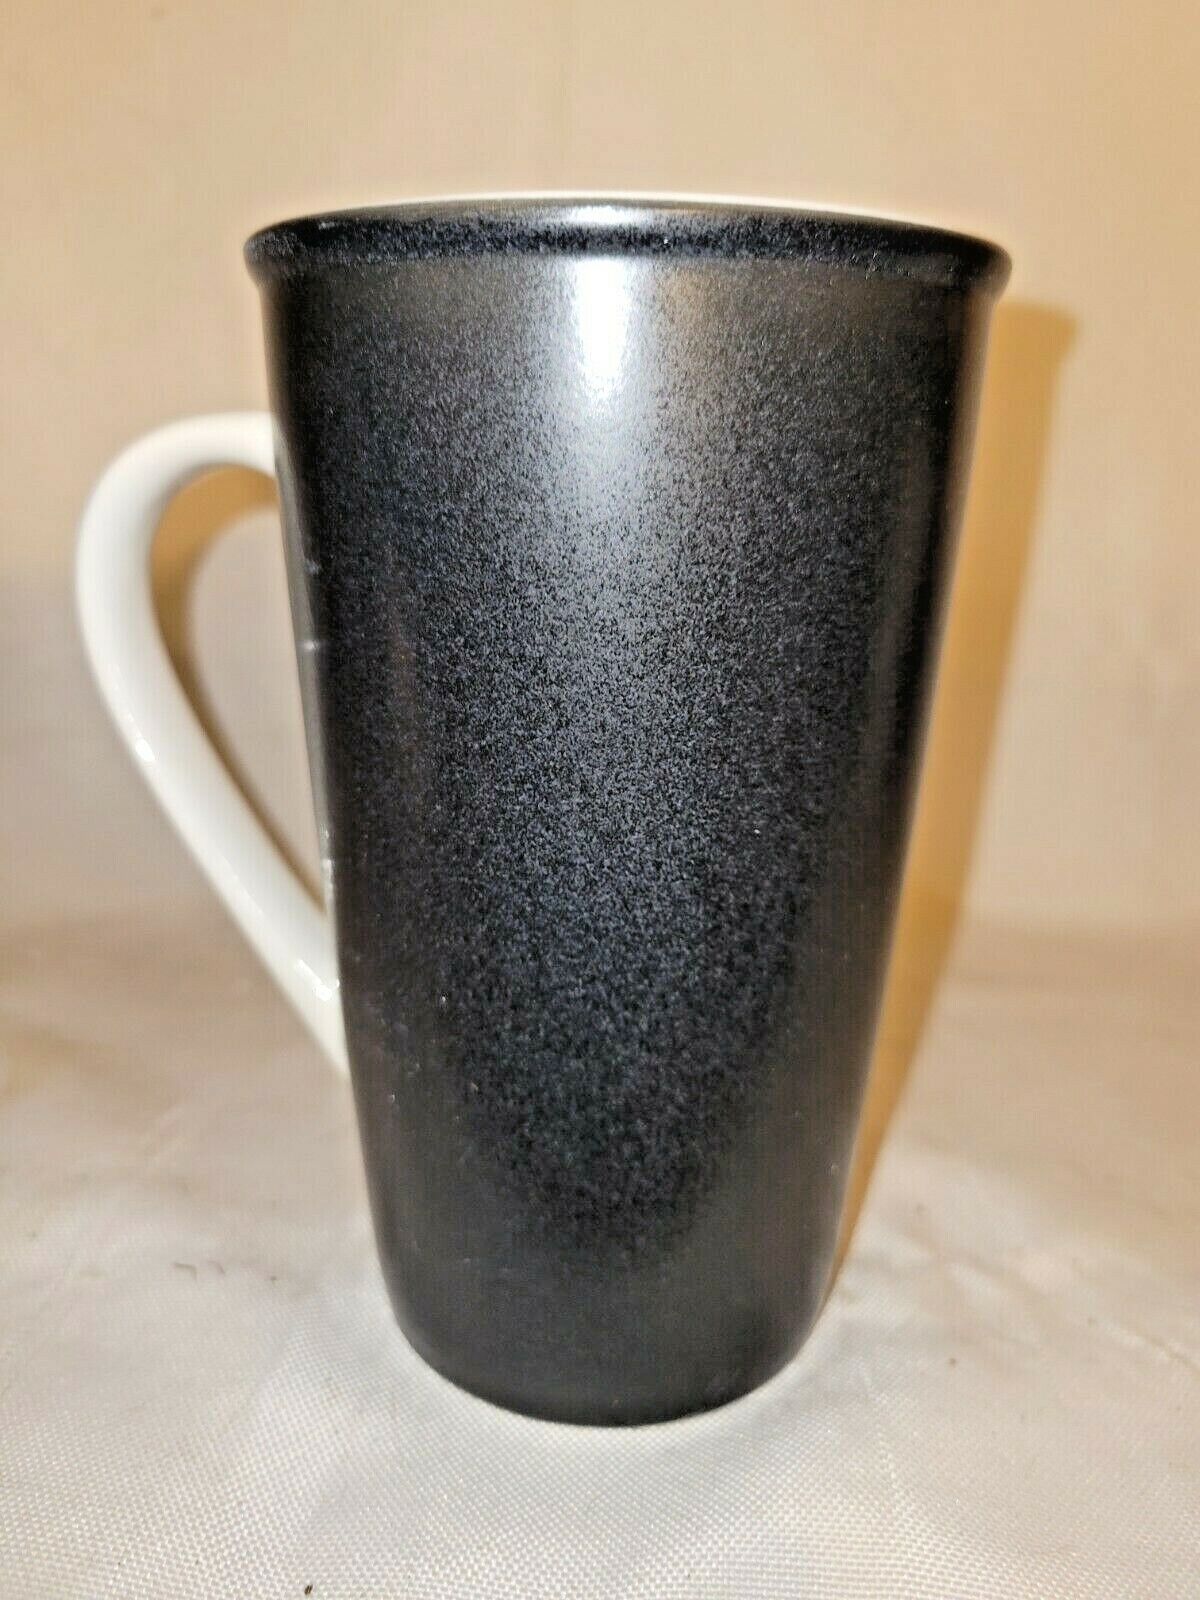 2010 Starbucks Tall Black & White Ceramic Coffee Mug Dishwasher & Microwave Safe